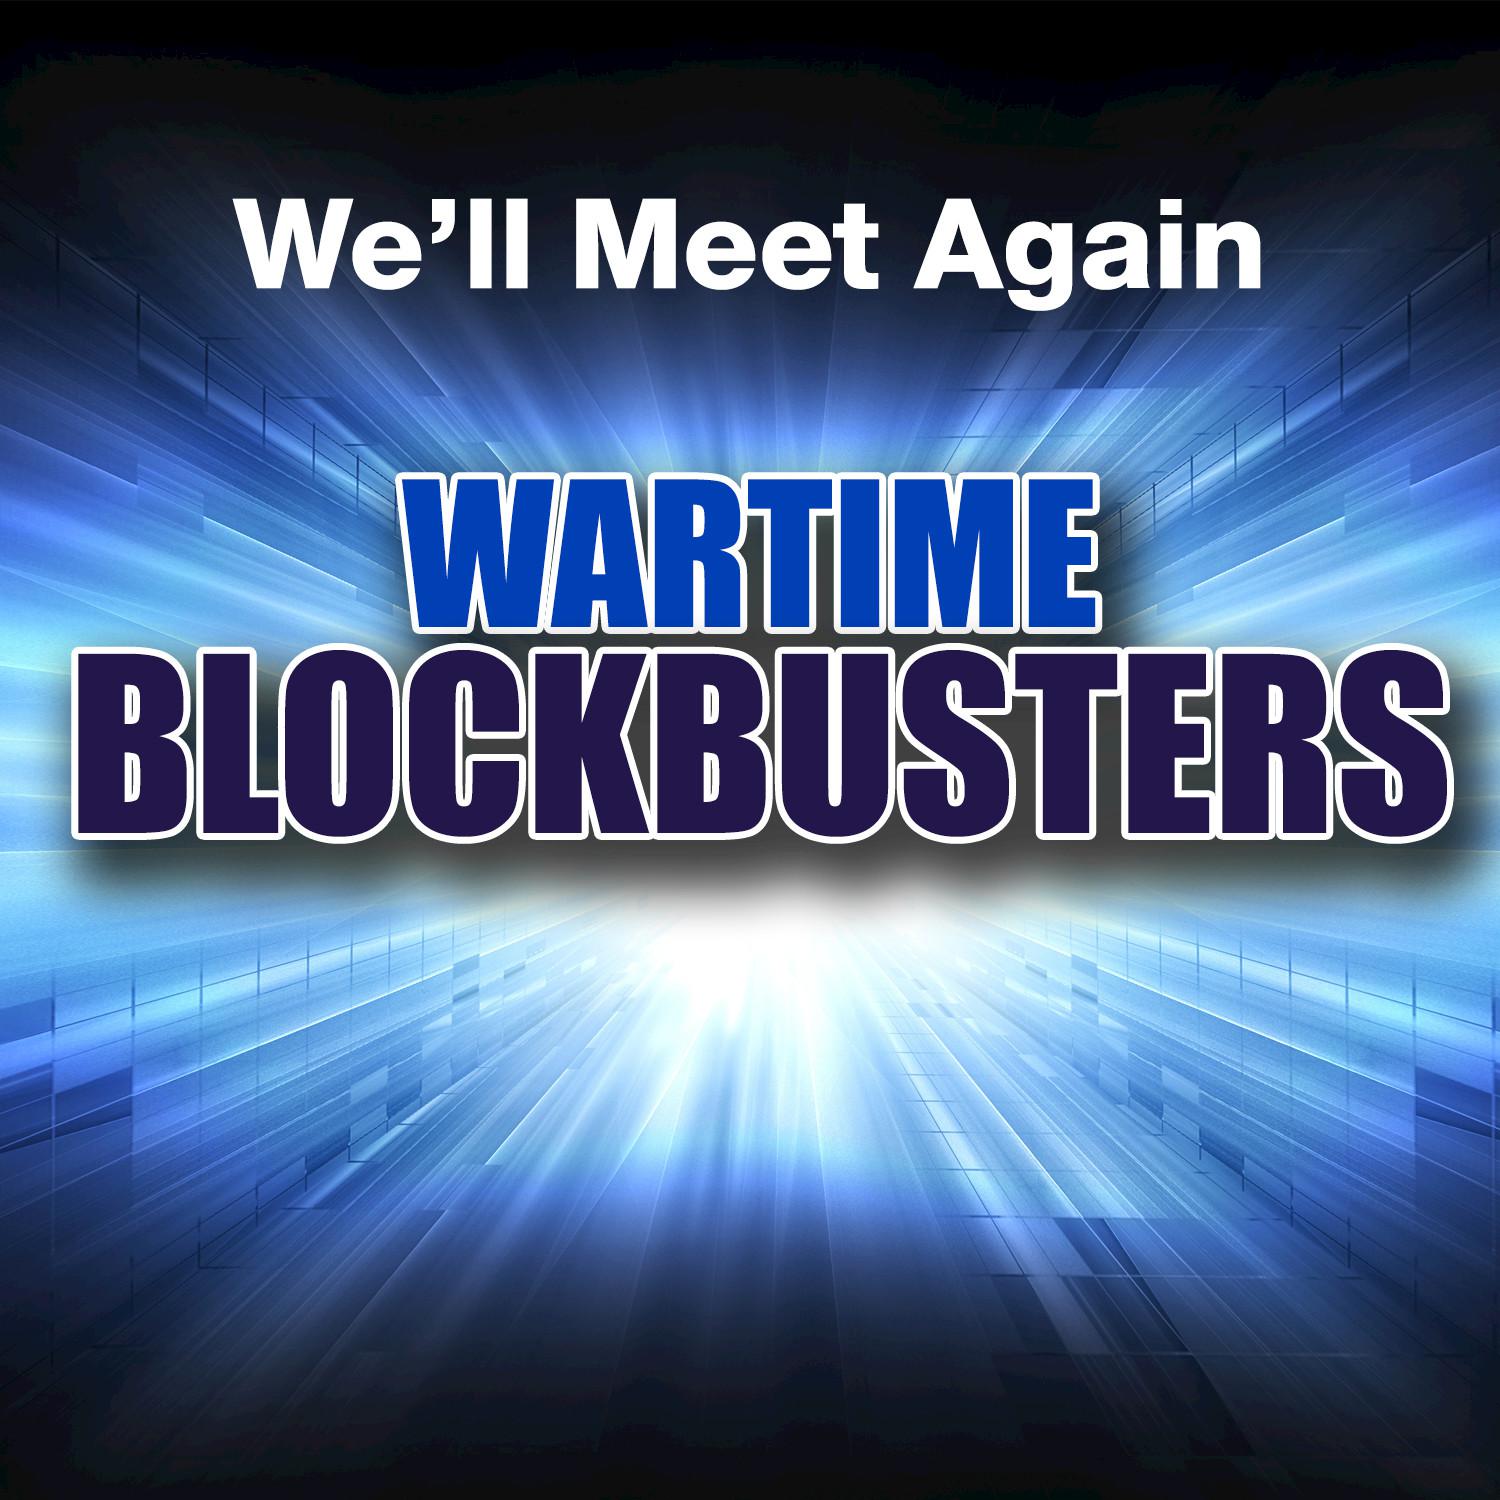 We'll Meet Again: Wartime Blockbusters